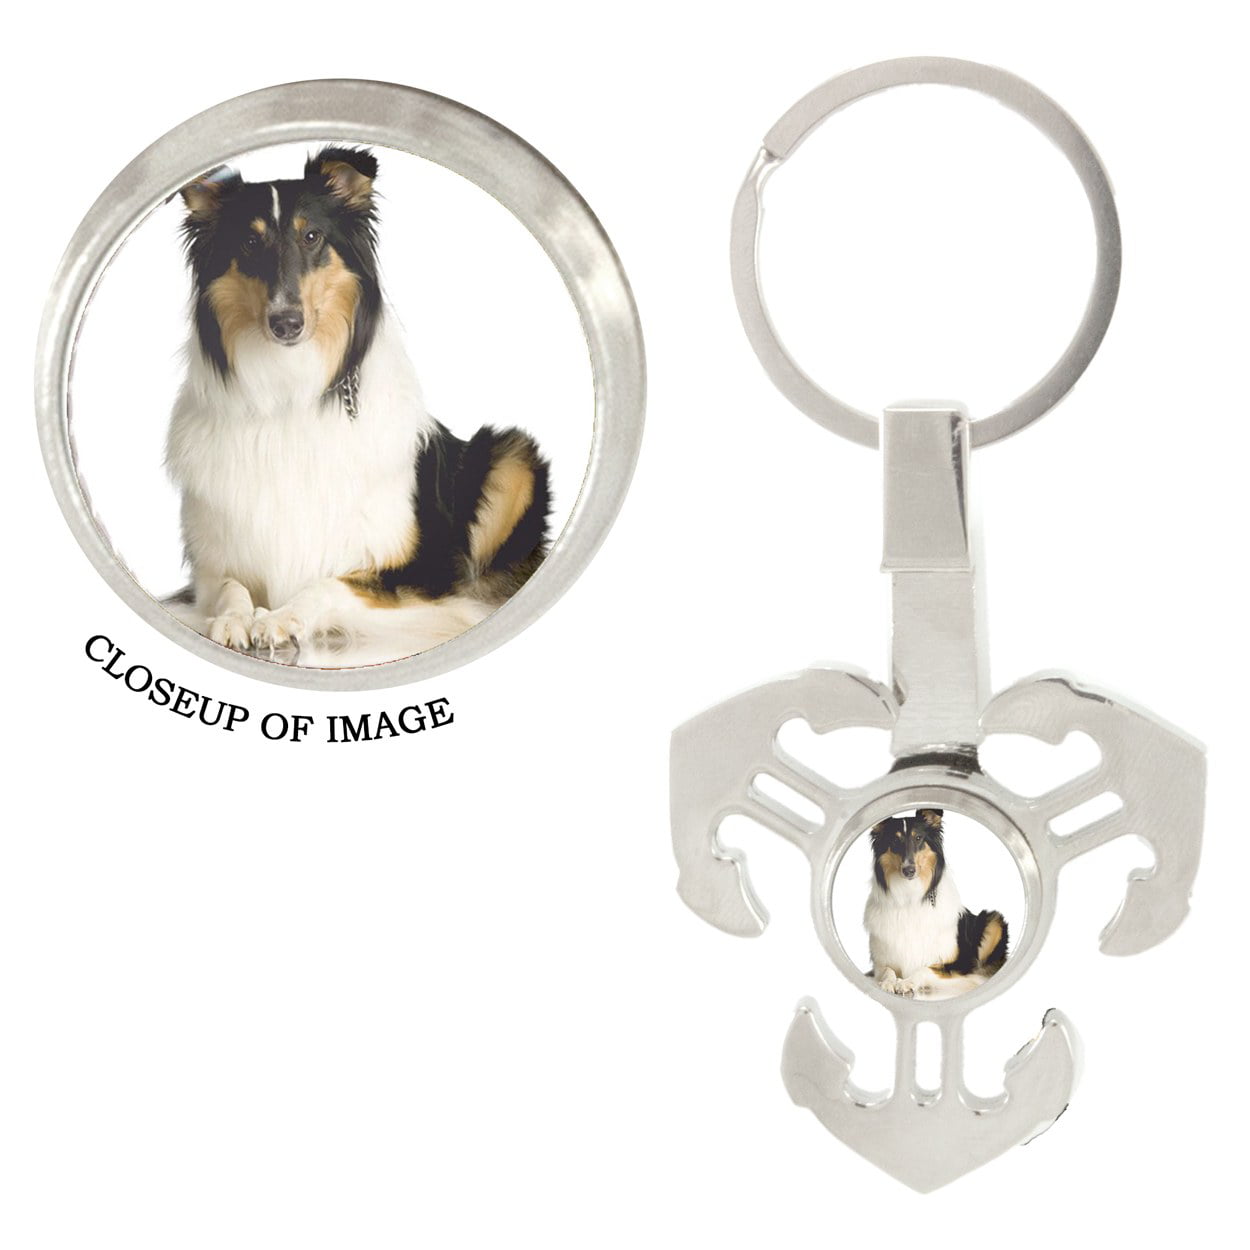 Rough Collie Dog Keyring Keyfob Lovely Image Fun Novelty Gift Present Idea